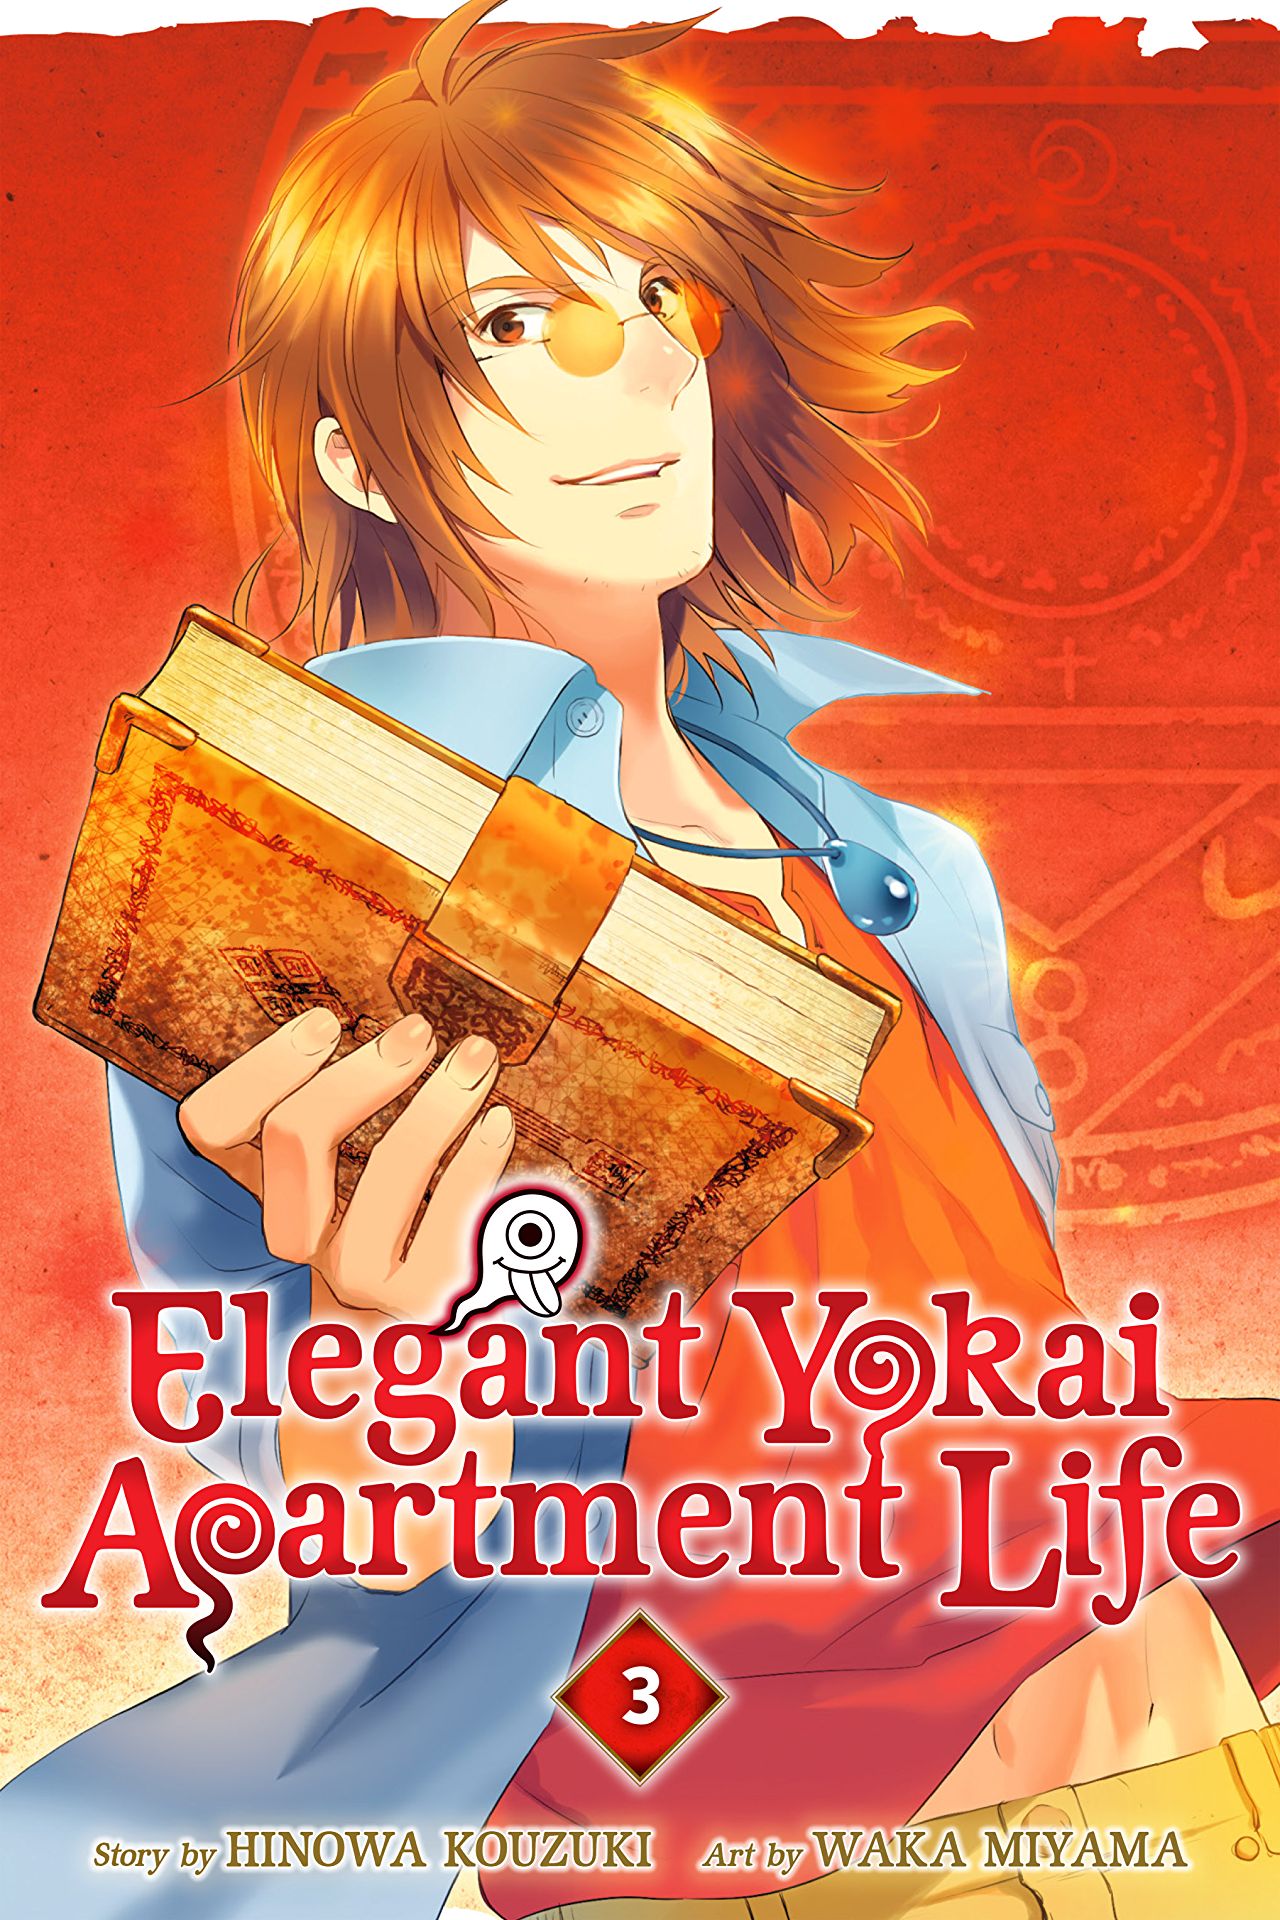 Elegant Yokai Apartment Life Vol. 3 Review